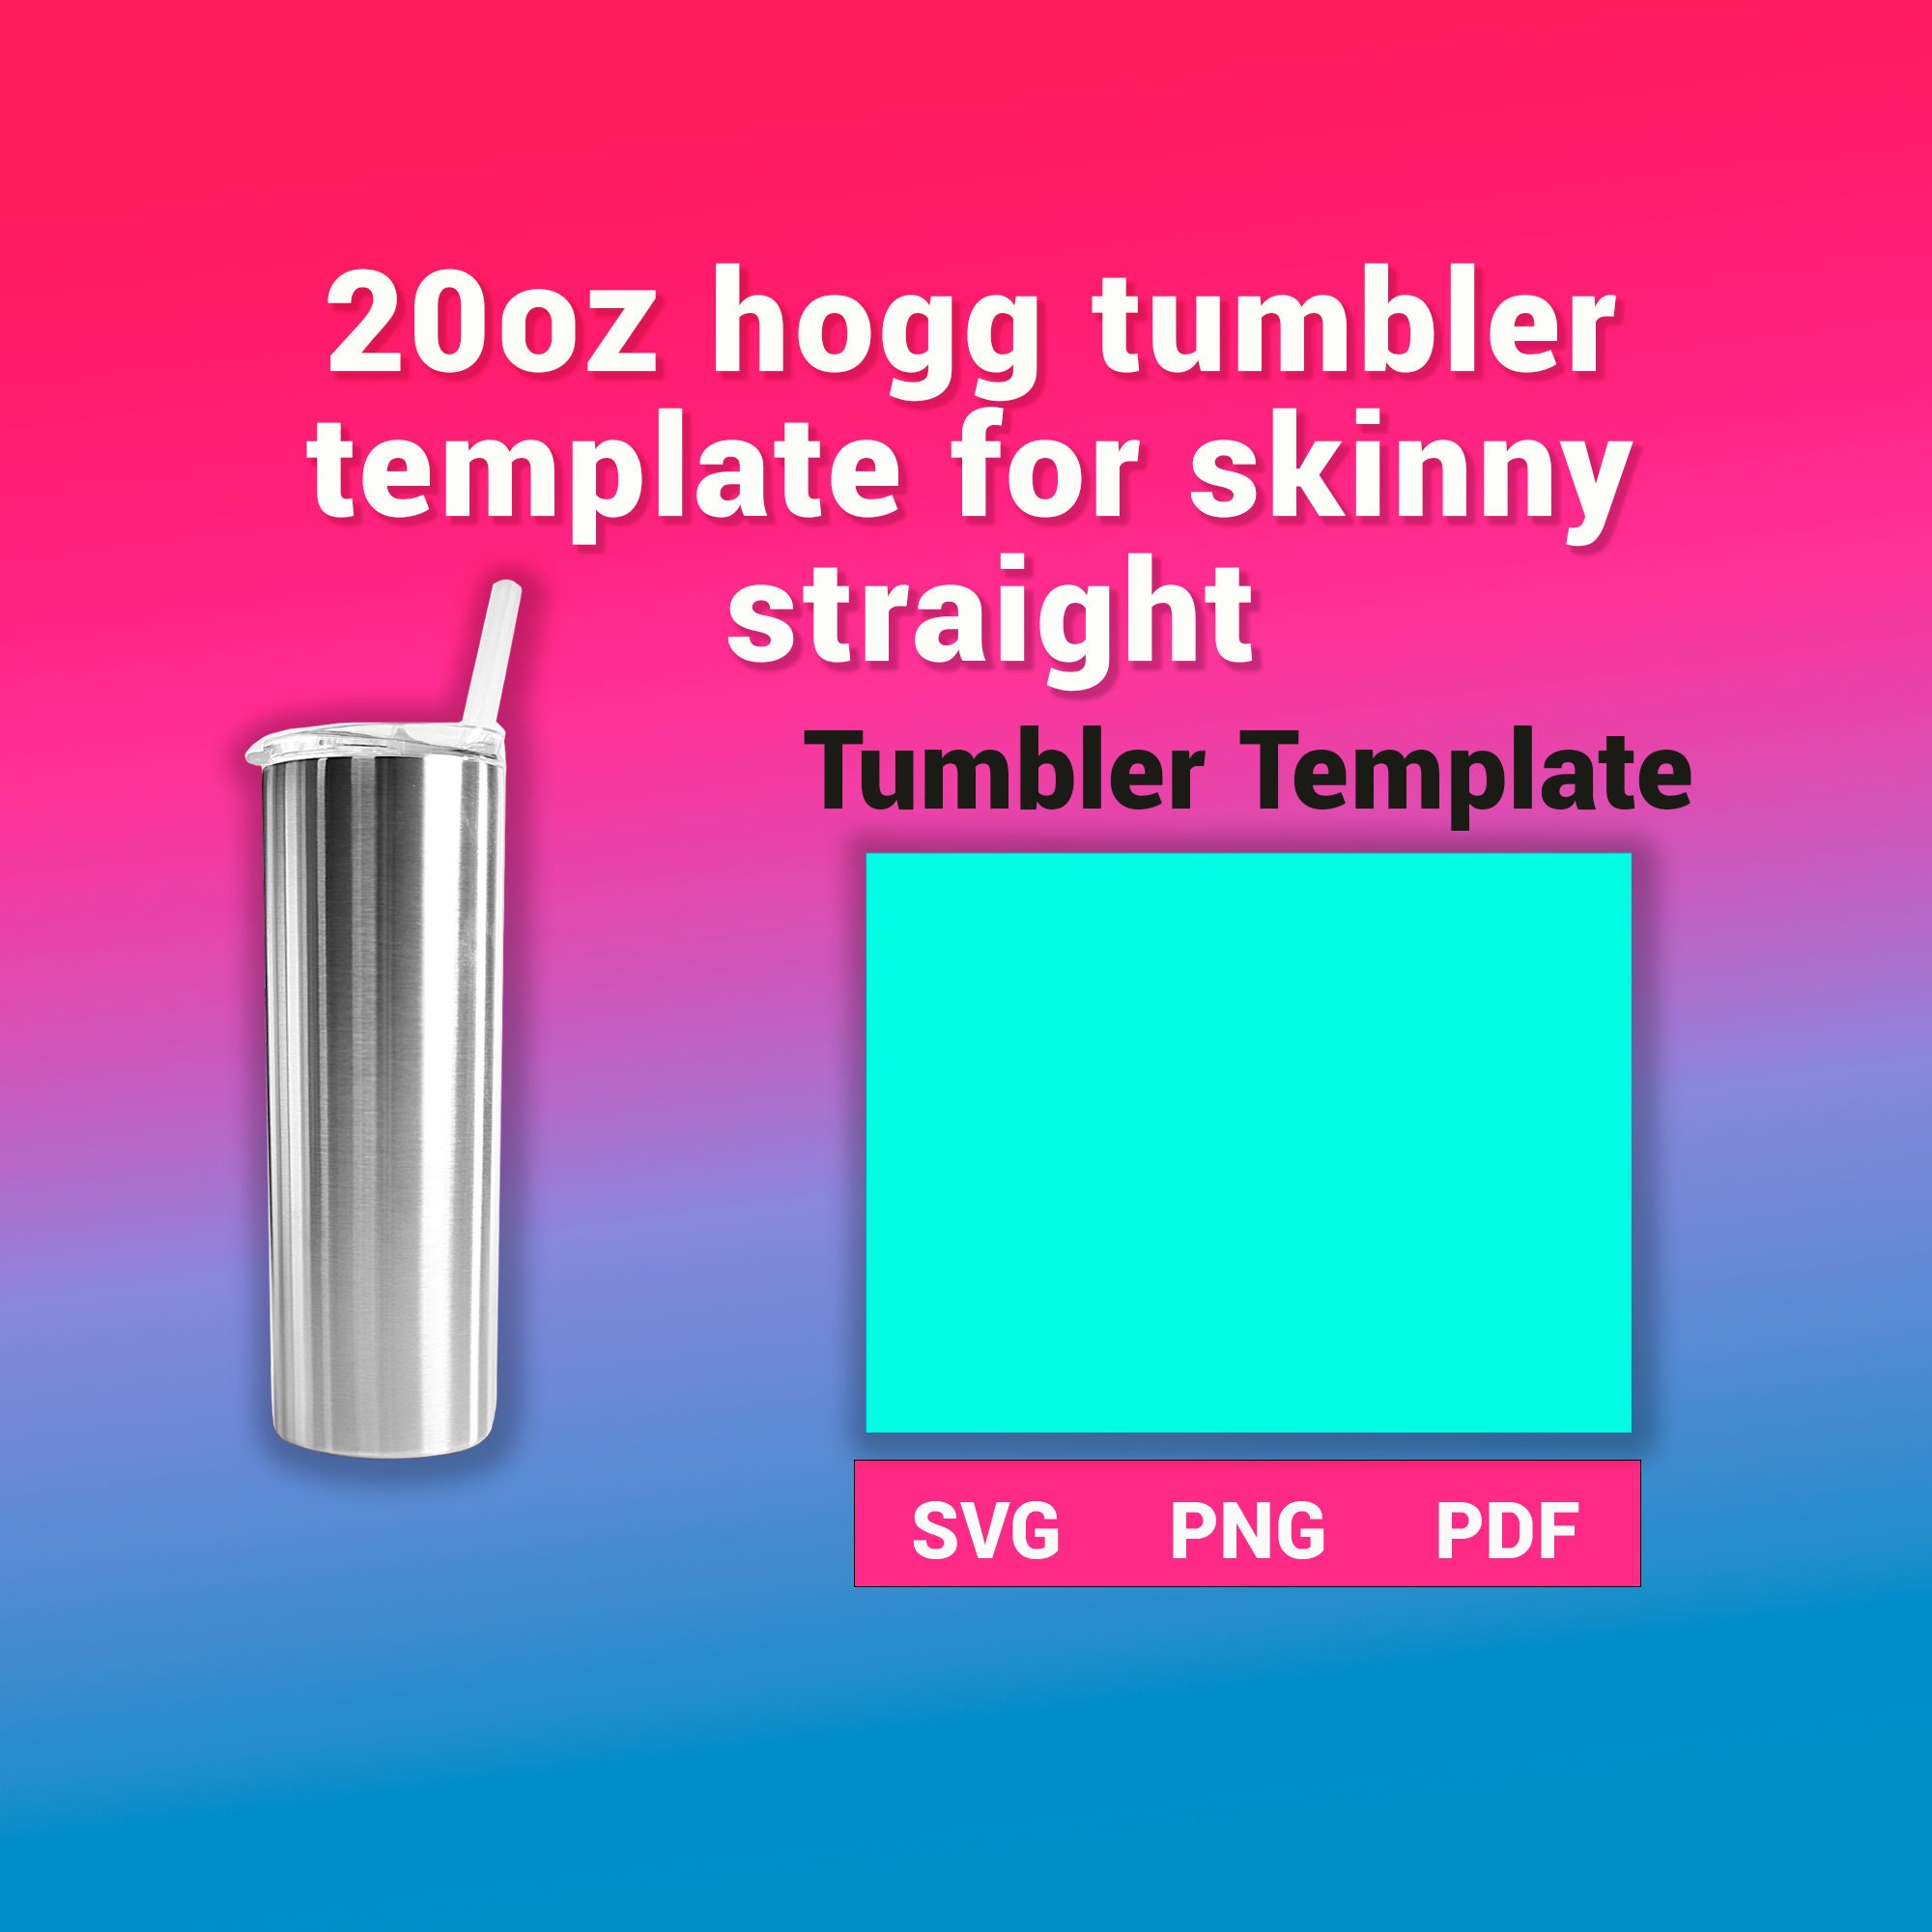 20oz Hogg Strawbler Tumbler Template Svg Png Dxf, Hogg Full Wrap for Tumbler,  Hogg 20oz Sublimation Tumbler Template, Hogg Strawbler 